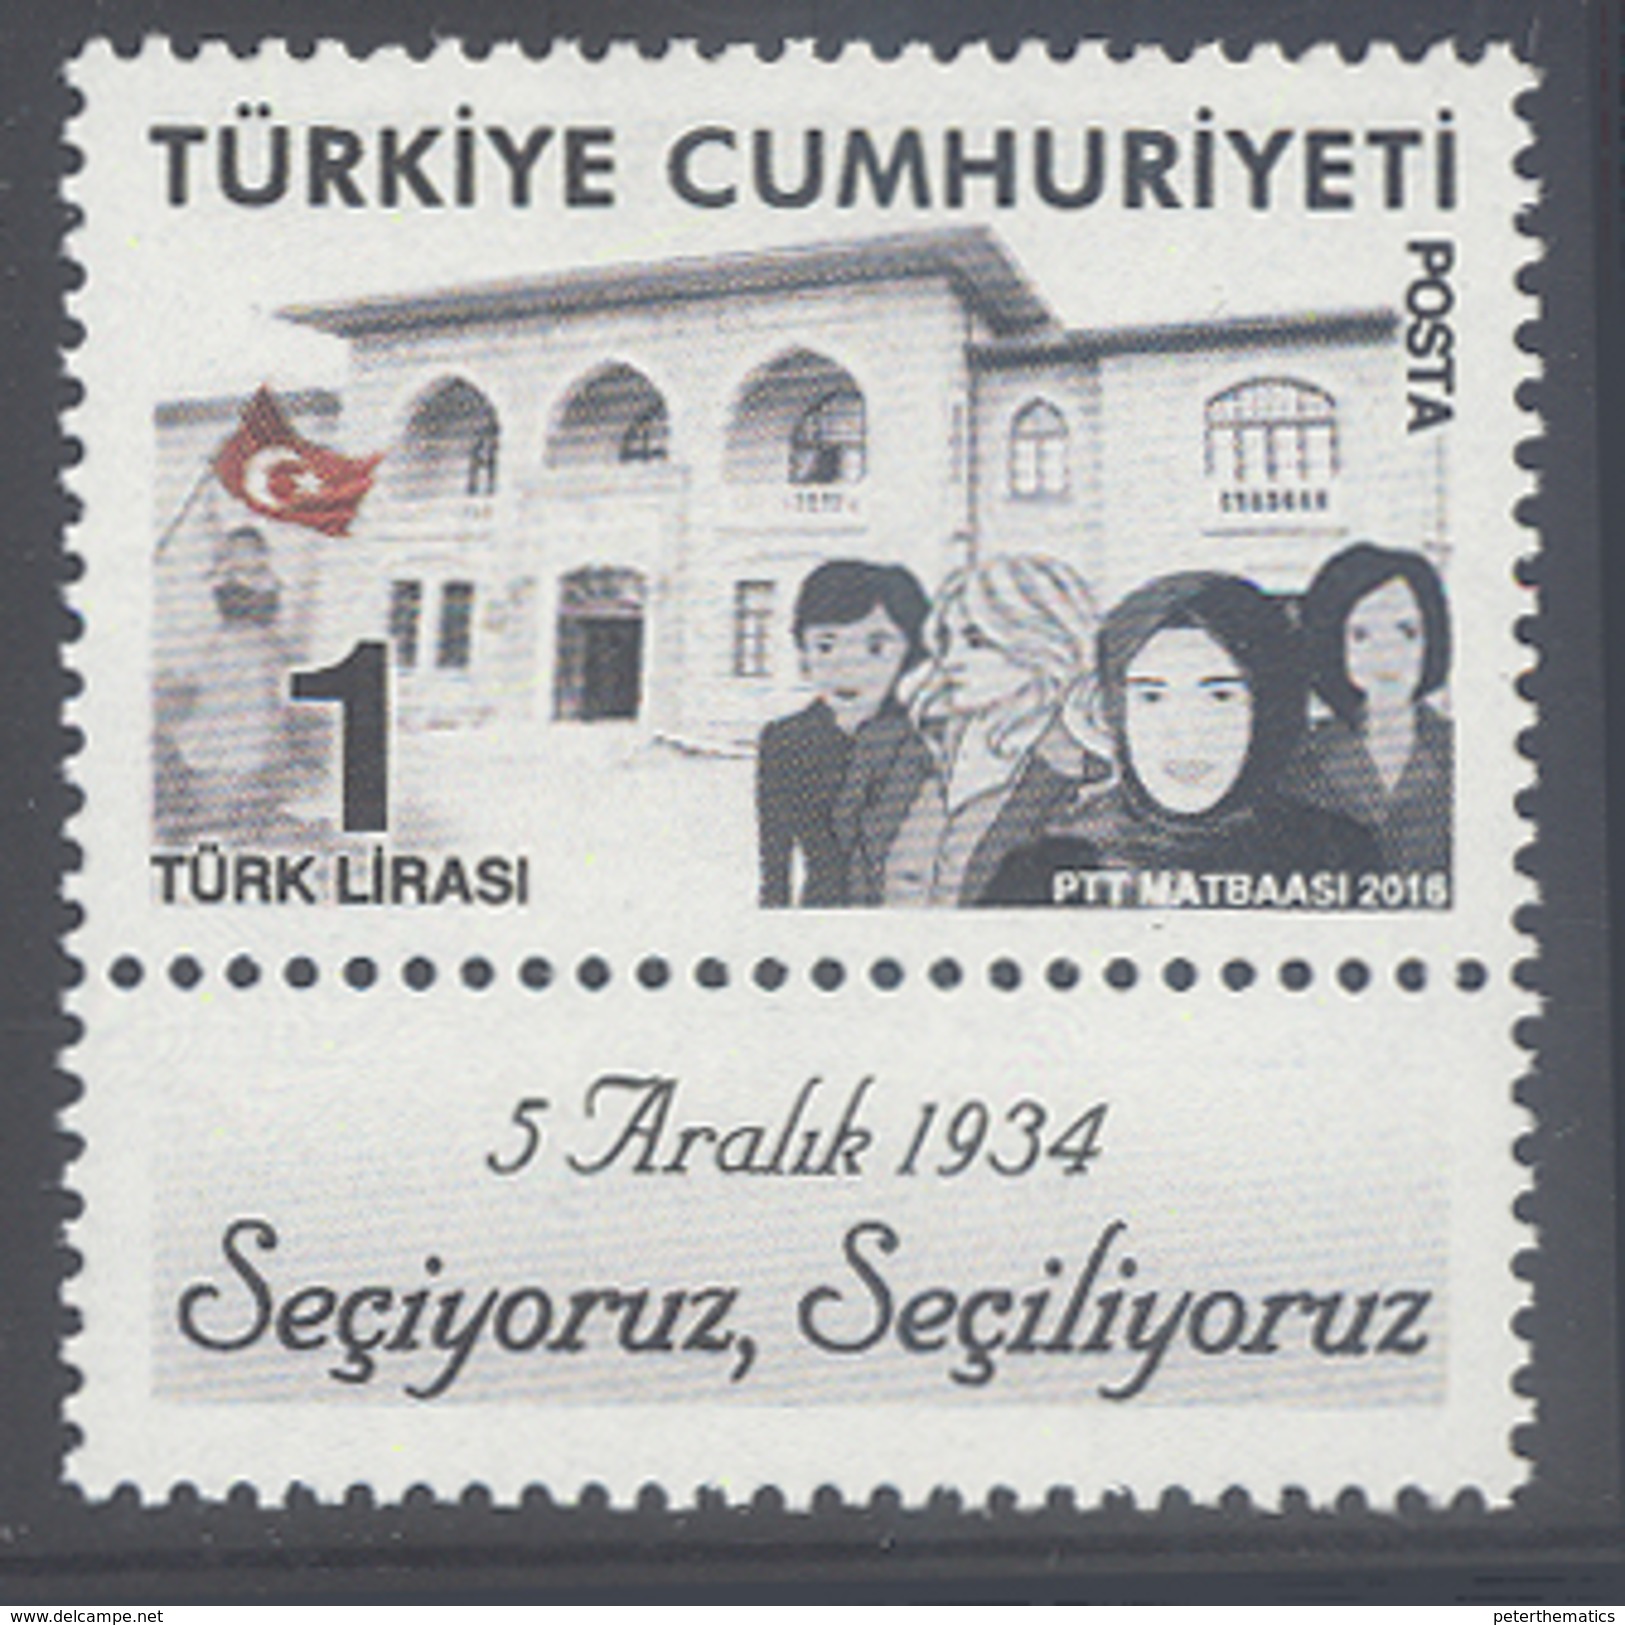 TURKEY, 2016, MNH, WOMEN'S RIGHTS, 1v - Porcelain